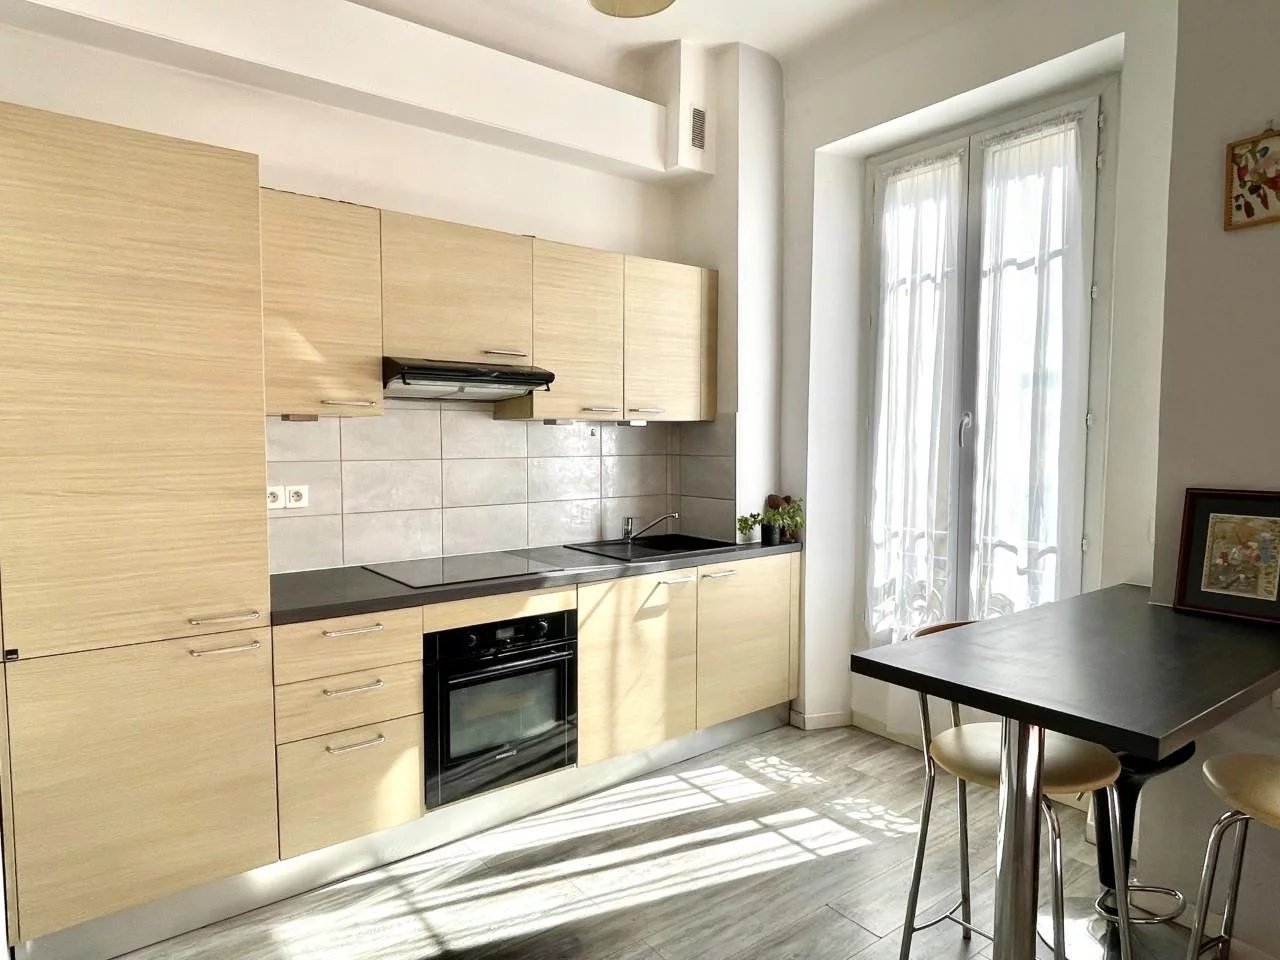 Appartement  2 Locali 46.14m2  In vendita   225 000 €